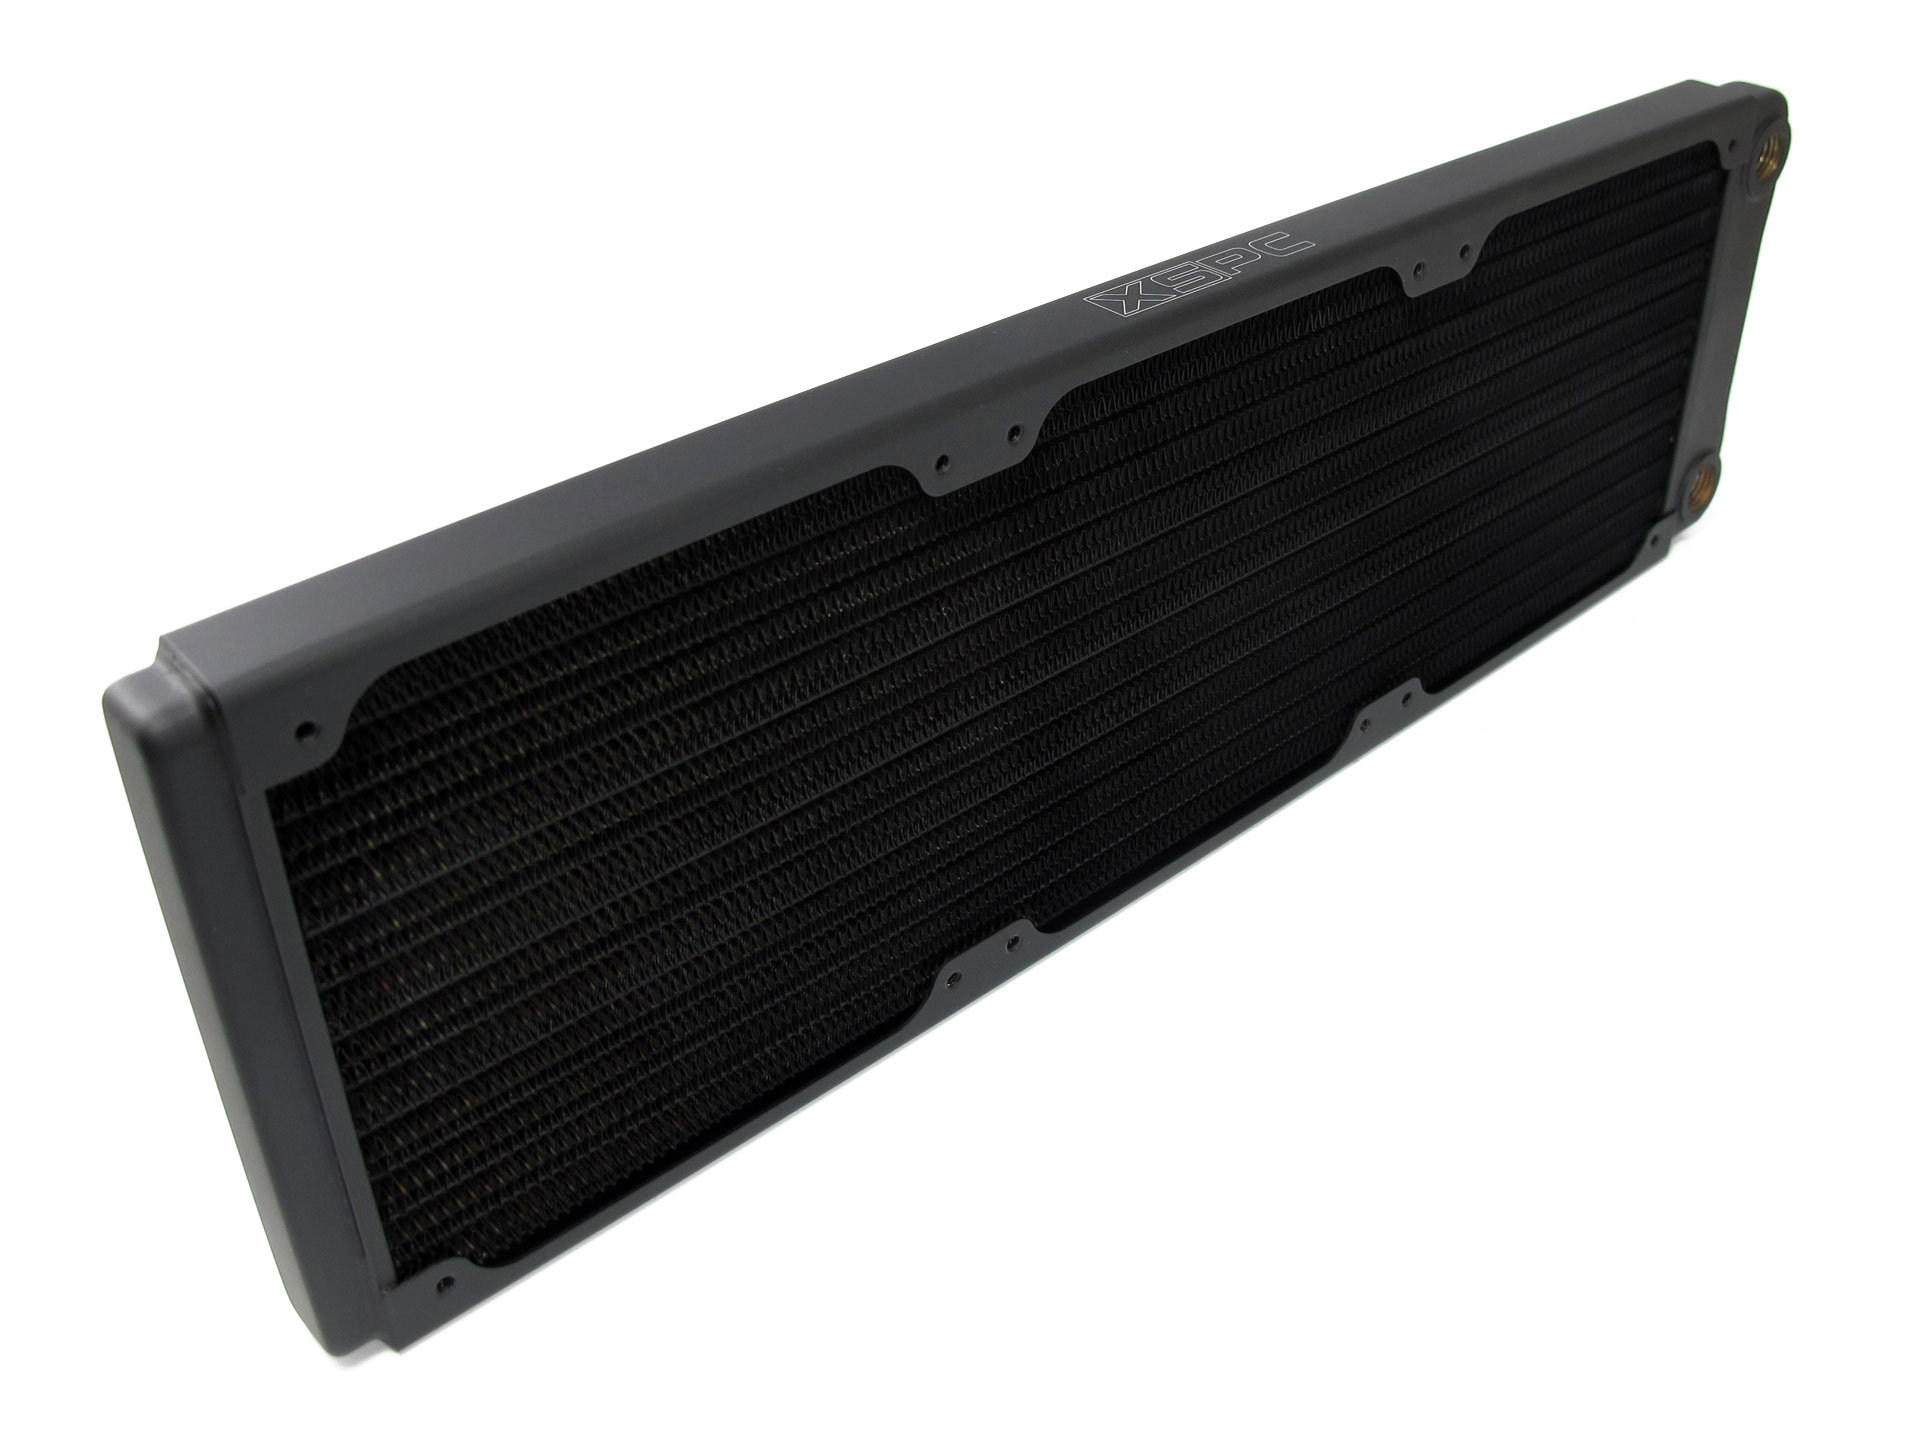 TX360 Ultrathin Radiator — XSPC - Performance PC Water Cooling